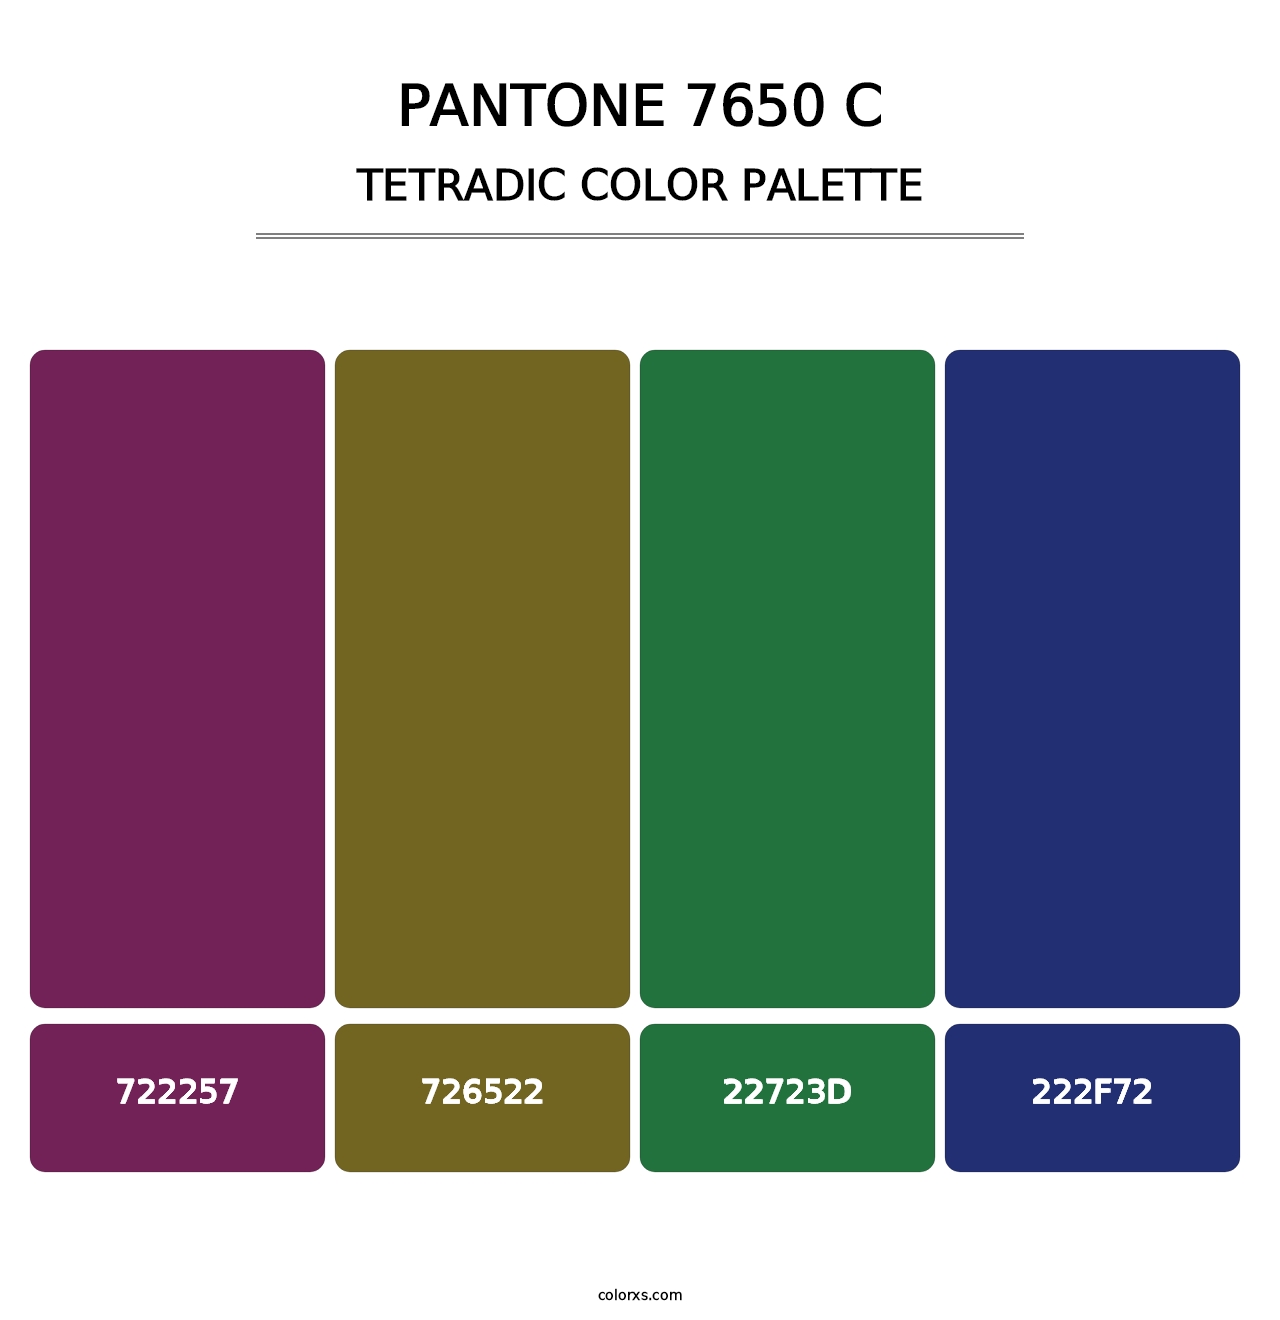 PANTONE 7650 C - Tetradic Color Palette